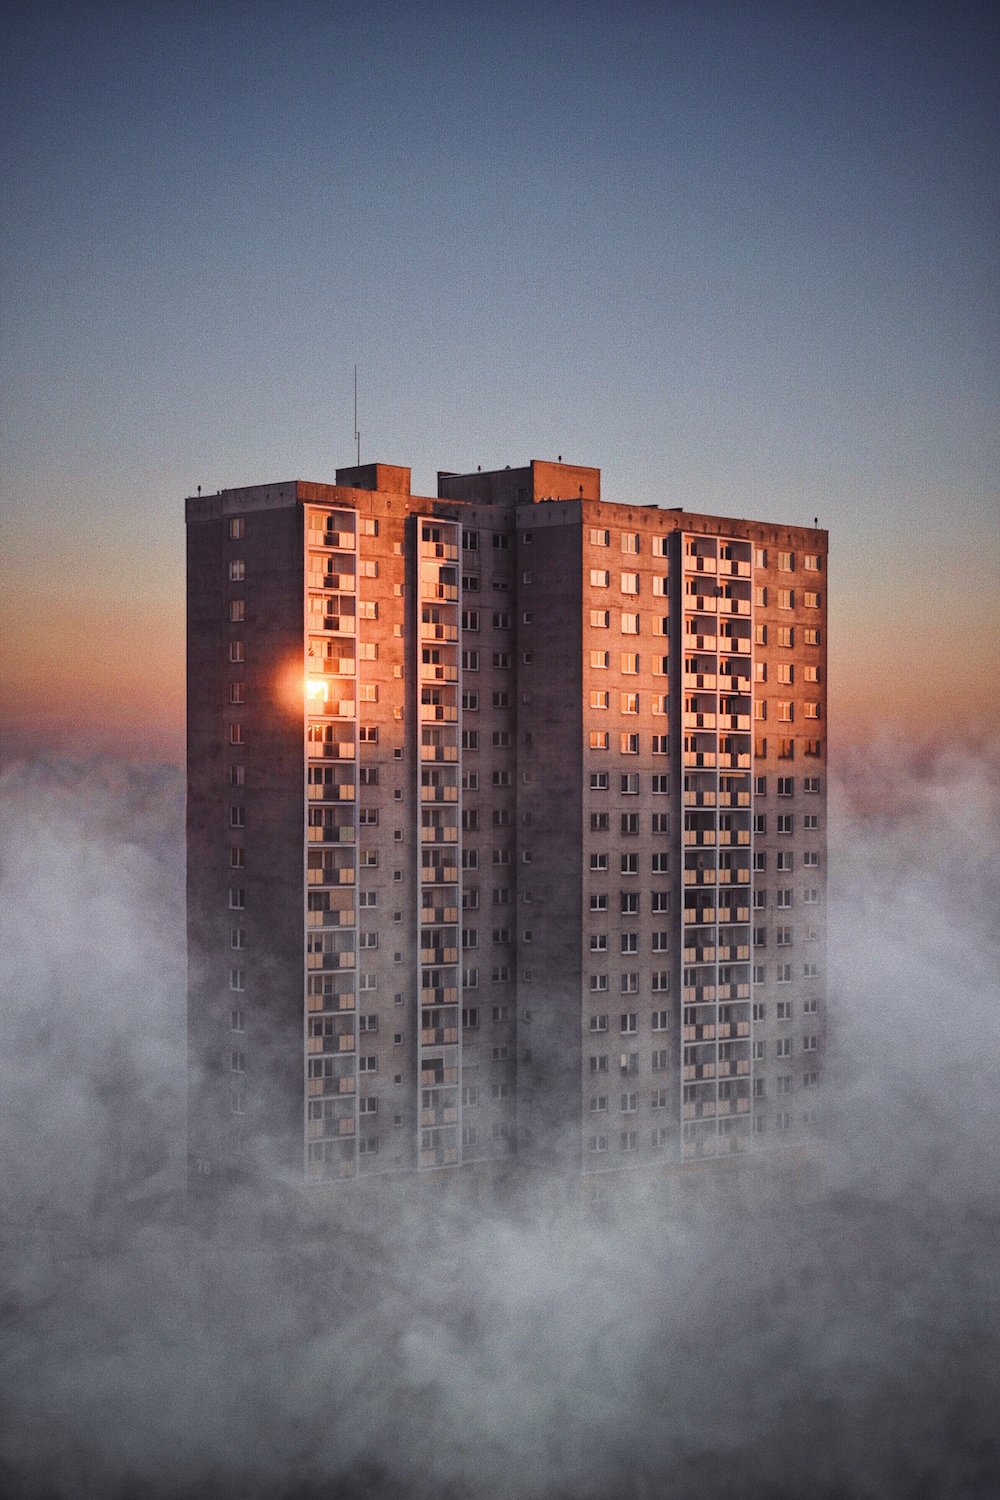 Photo of the week: a vertigo-inducing view from above Poznań's smog